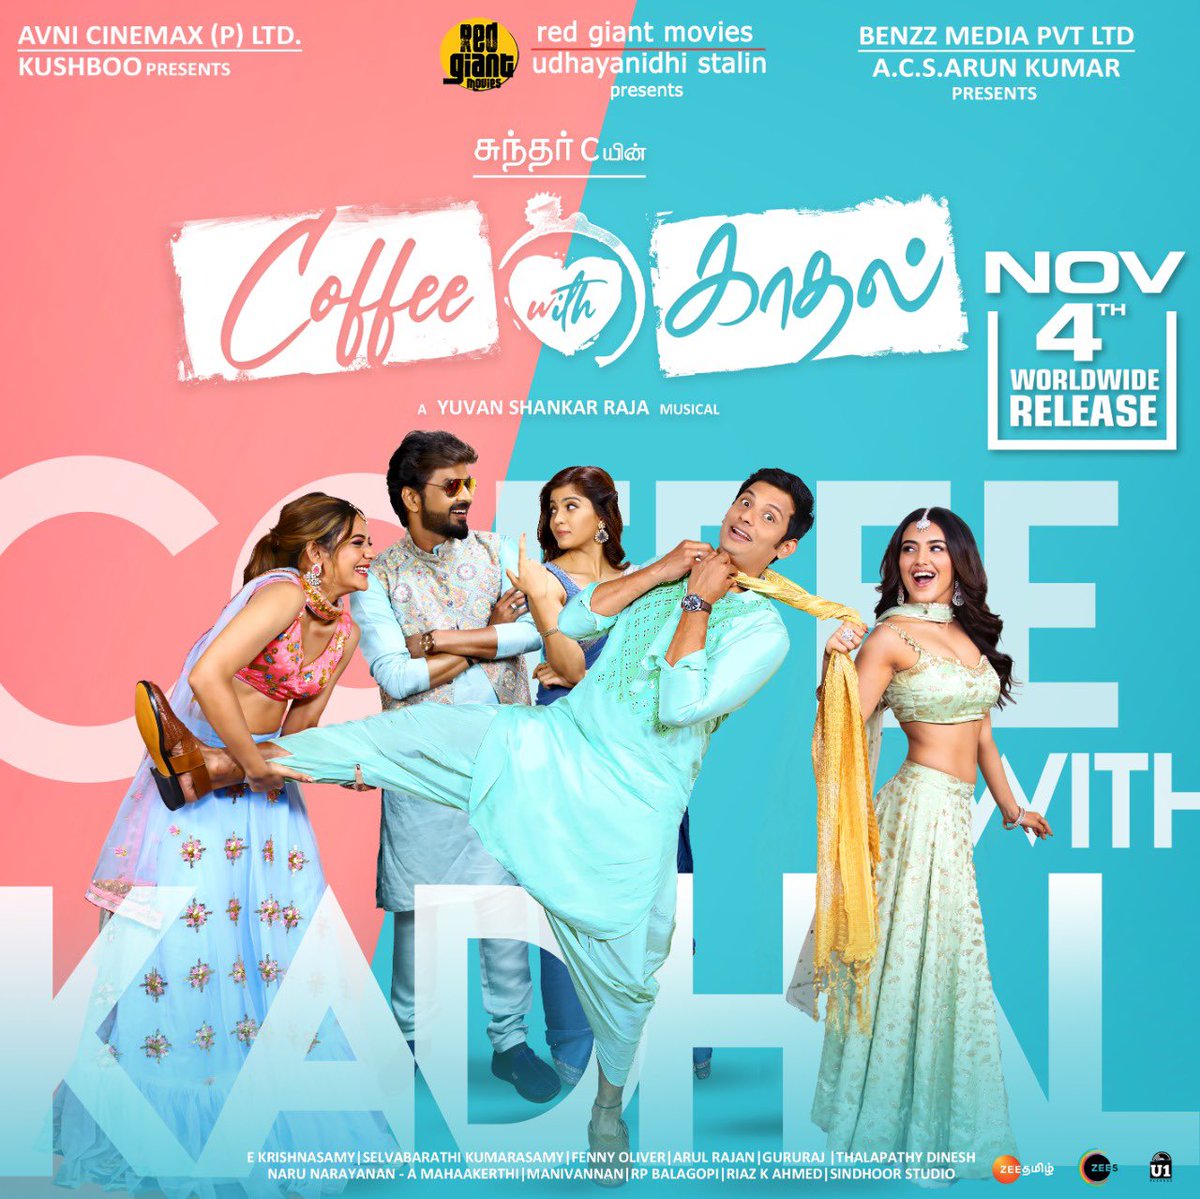 On December 9, @ZEE5India and @ZEE5Tamil will debut #CoffeeWithKadhal! In Kannada, Tamil, Telugu, Malayalam